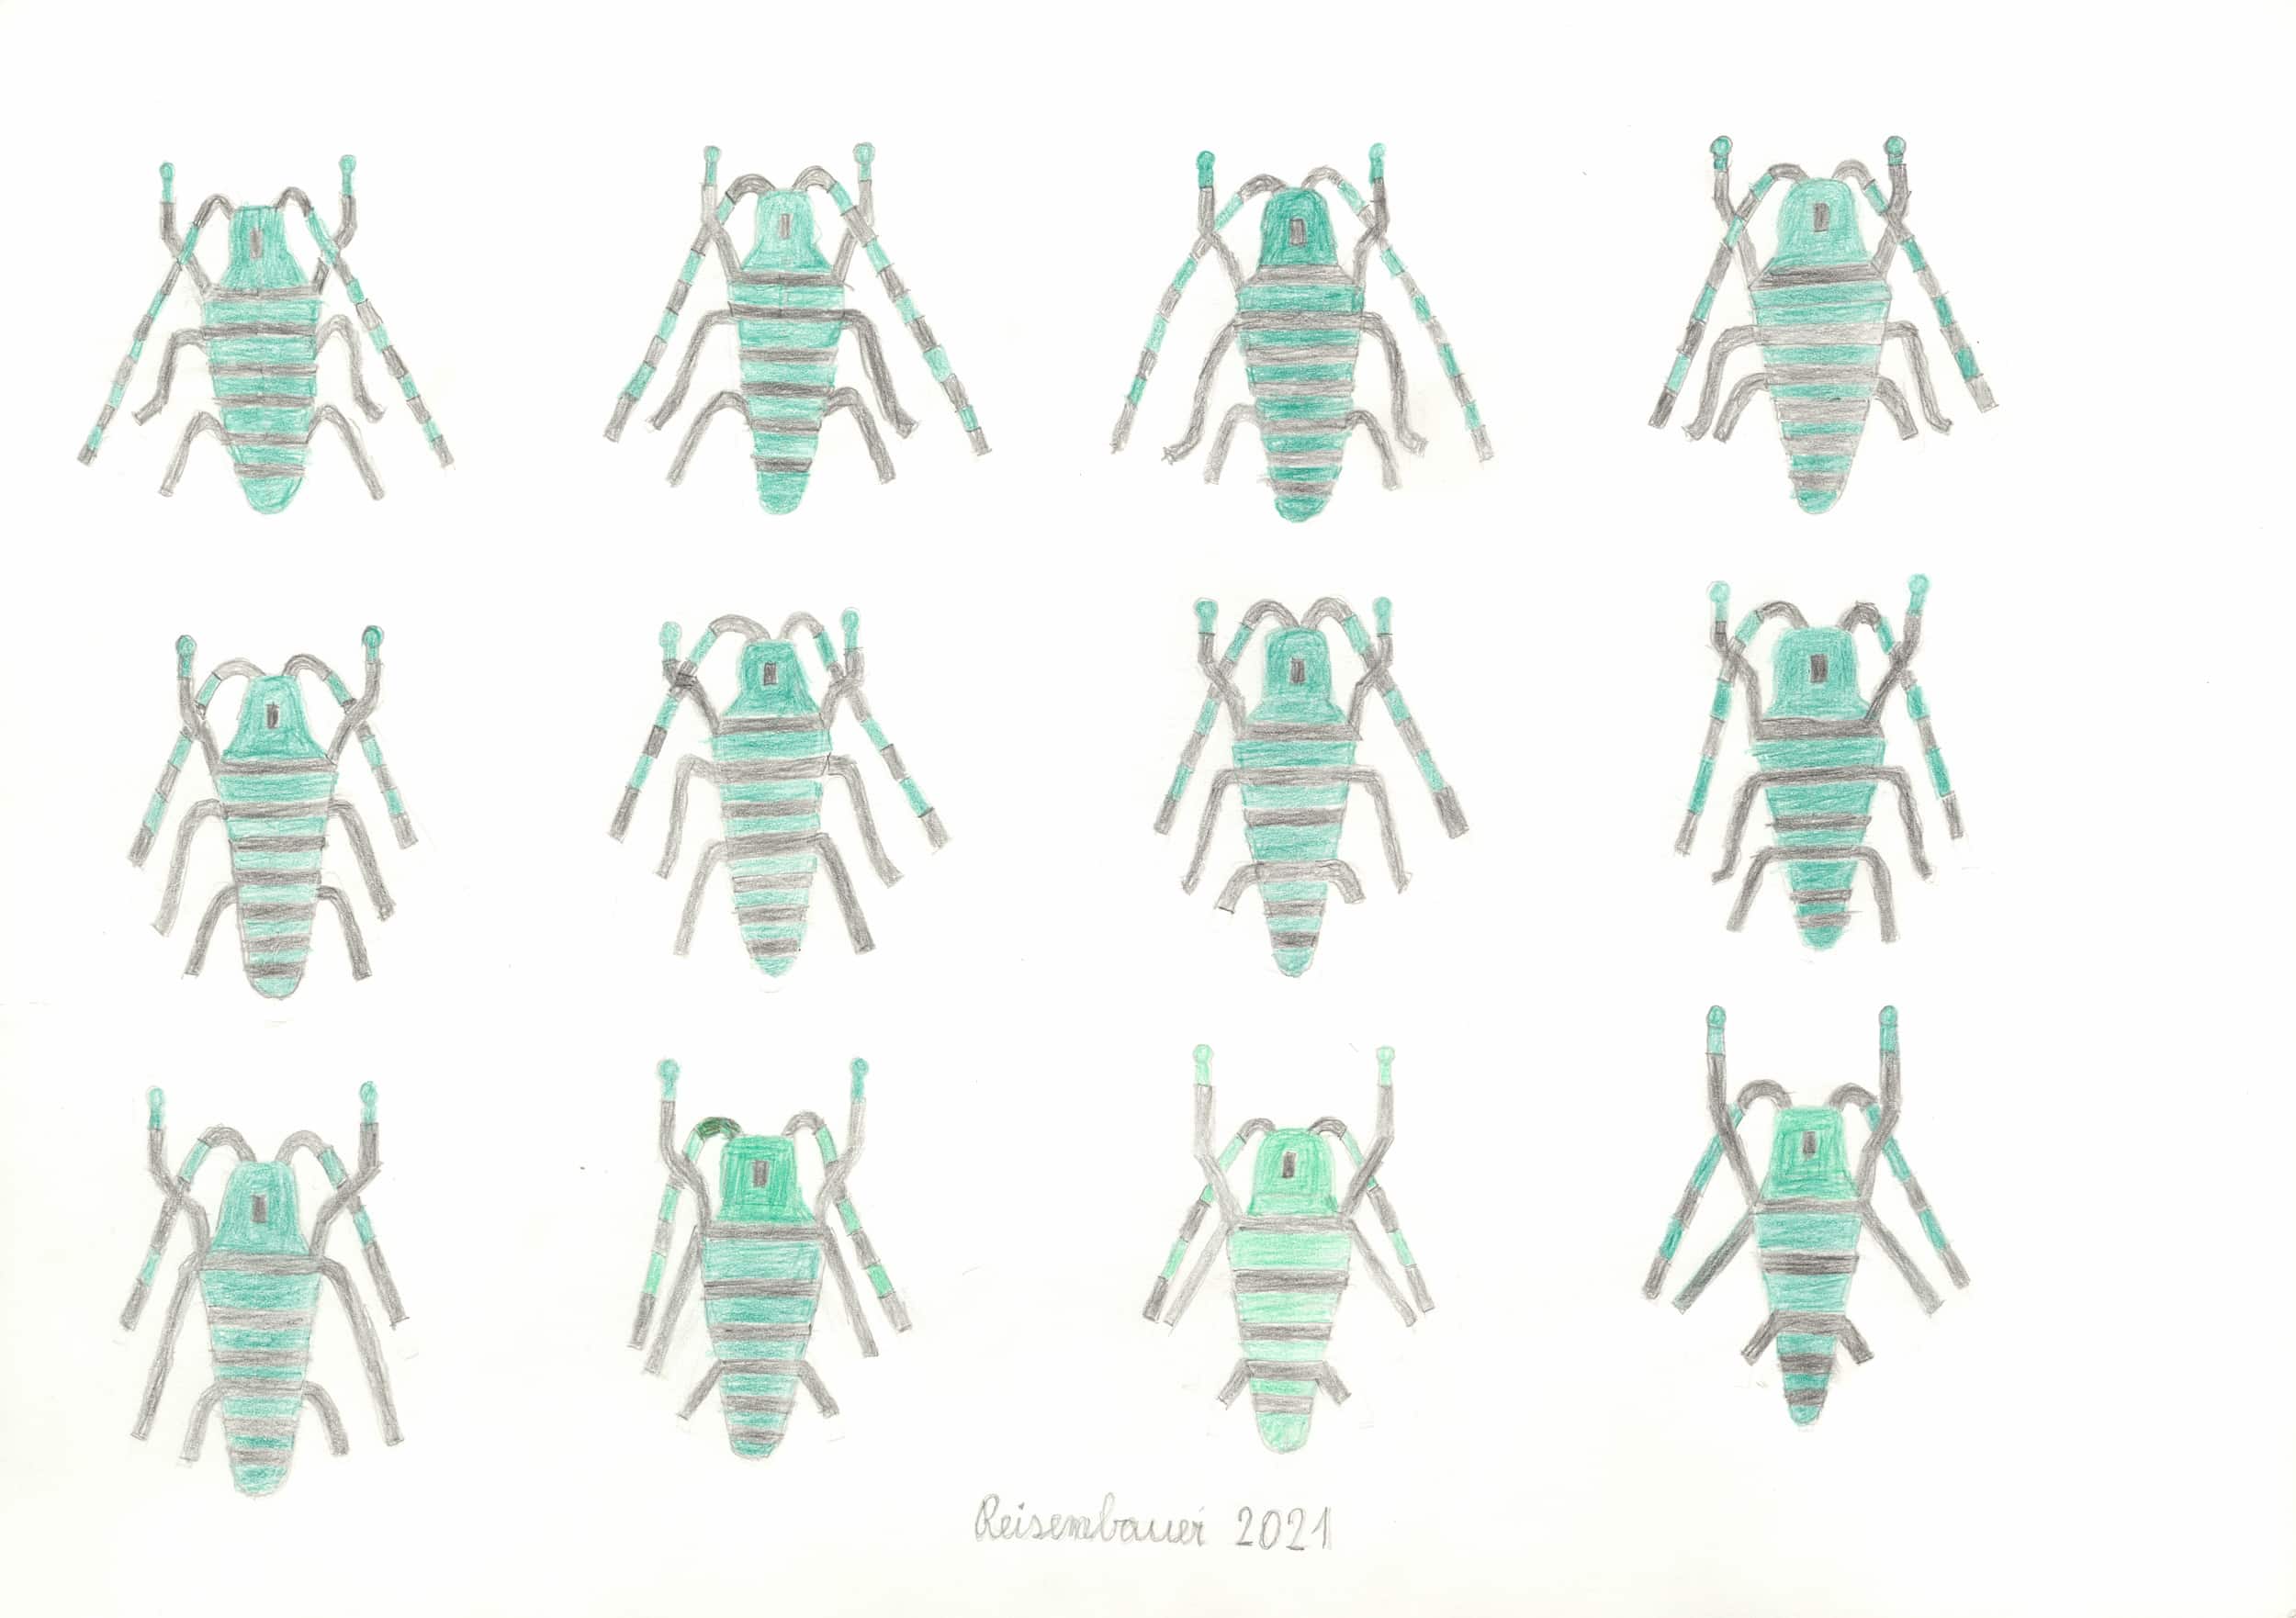 reisenbauer heinrich - Käfer / Beetles